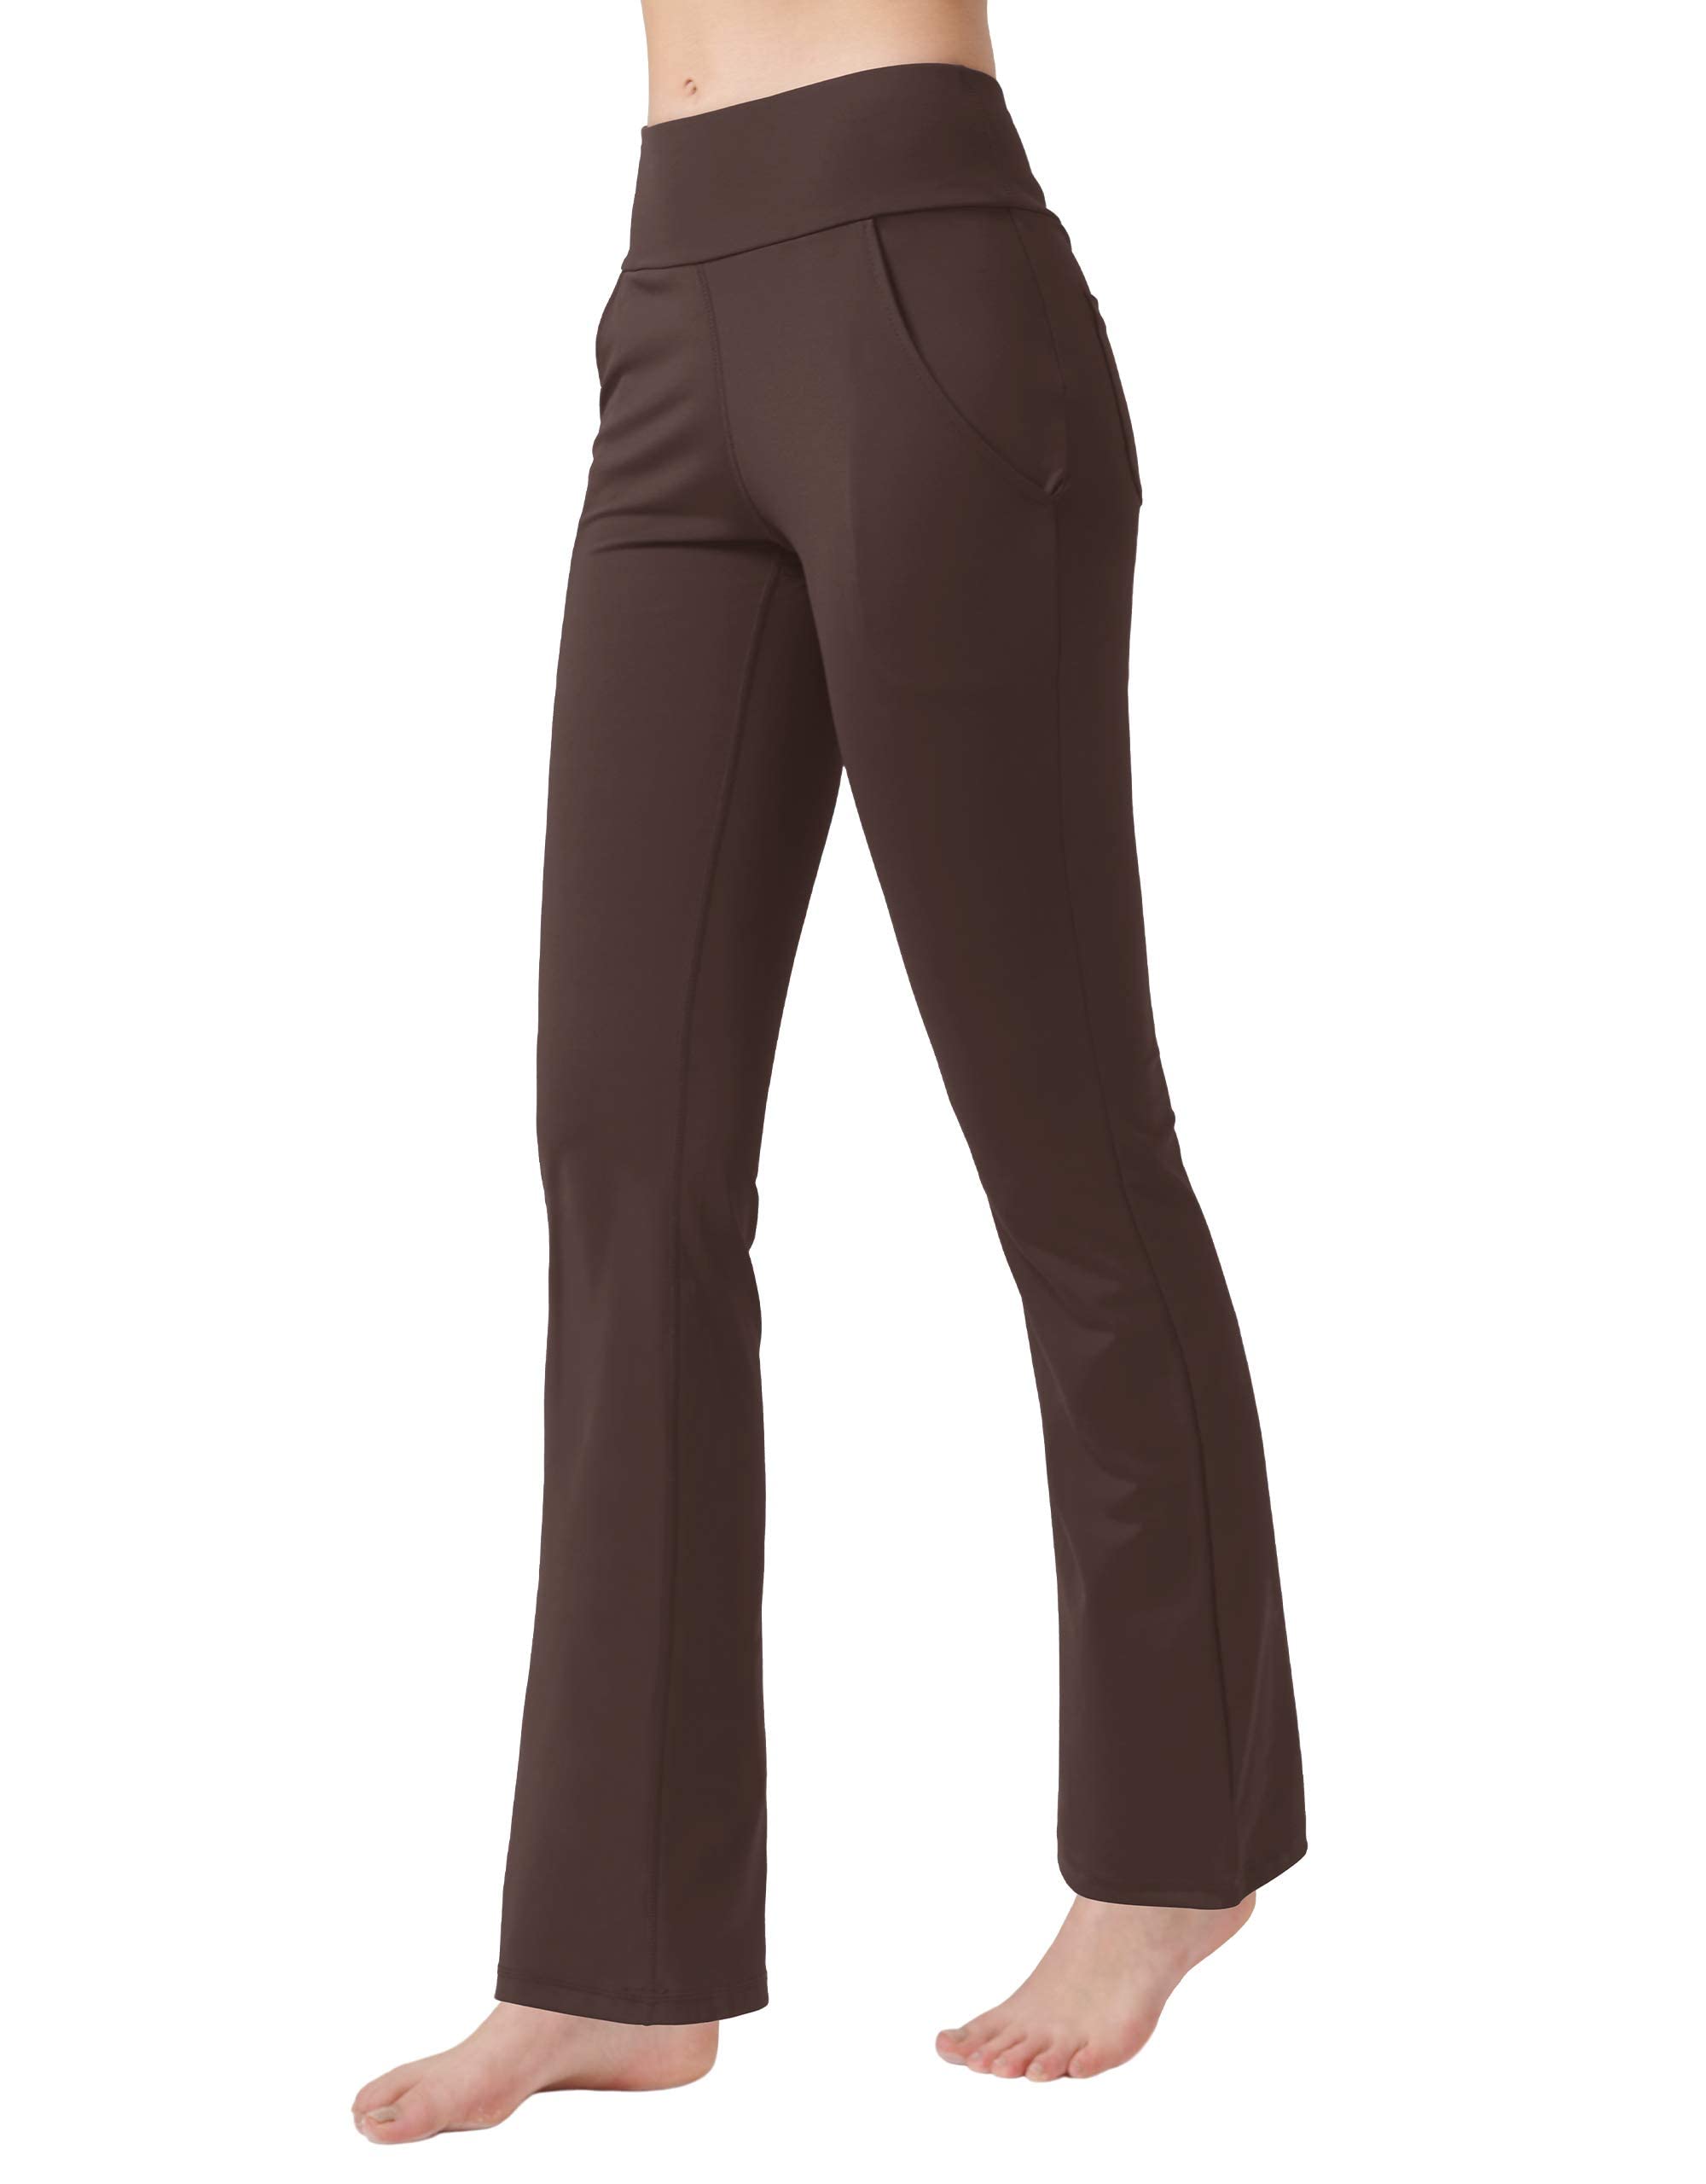 nuveti Women's High Waisted Boot Cut Yoga Pants 4 Pockets Workout Pants Tummy Control Women Bootleg Work Pants Dress Pants (Brown, Large)